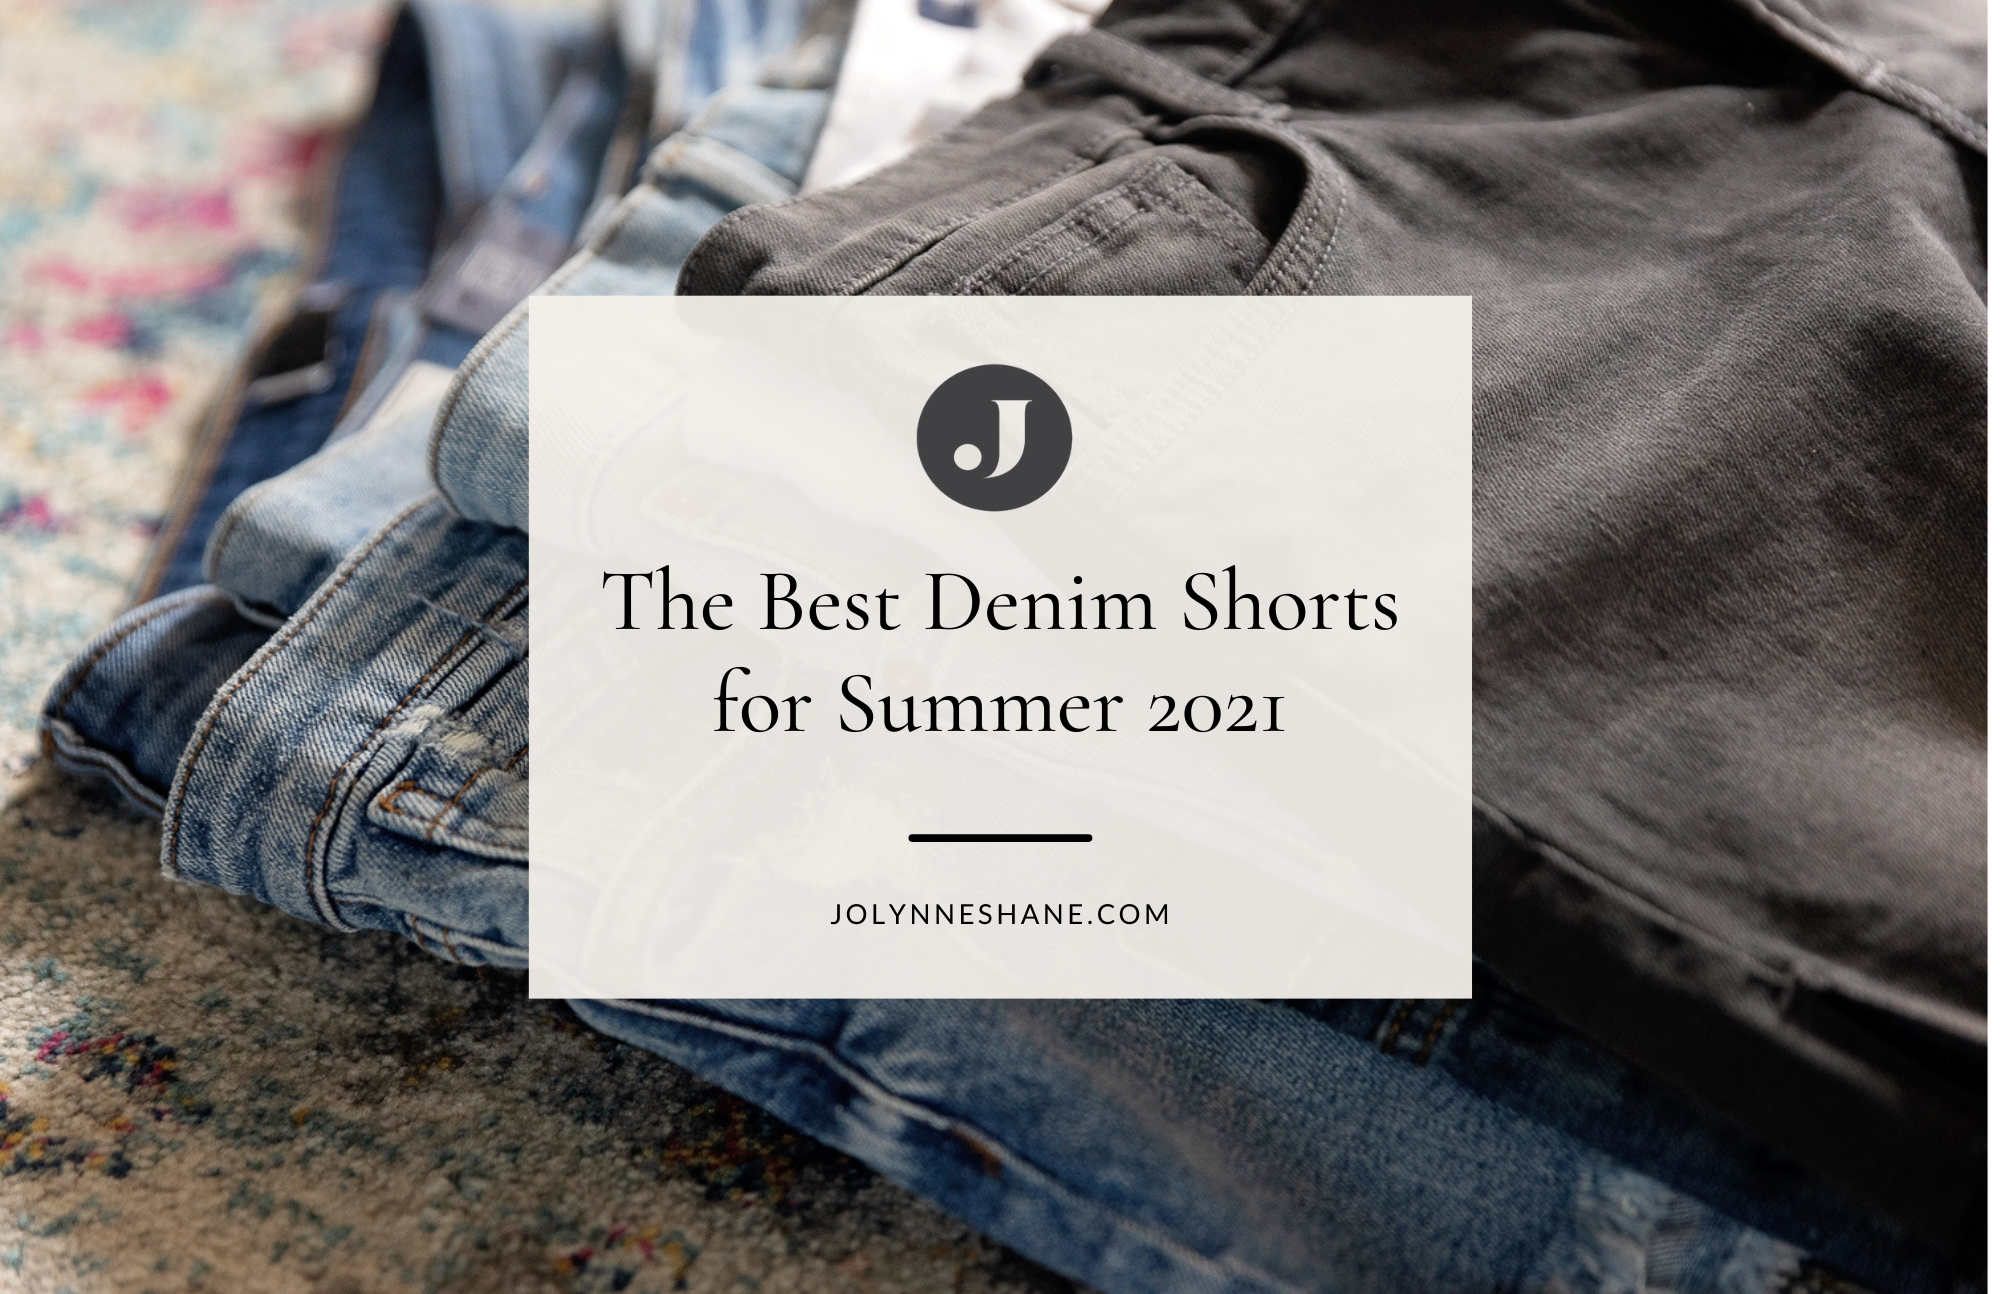 The Best Denim Shorts for Summer 2021